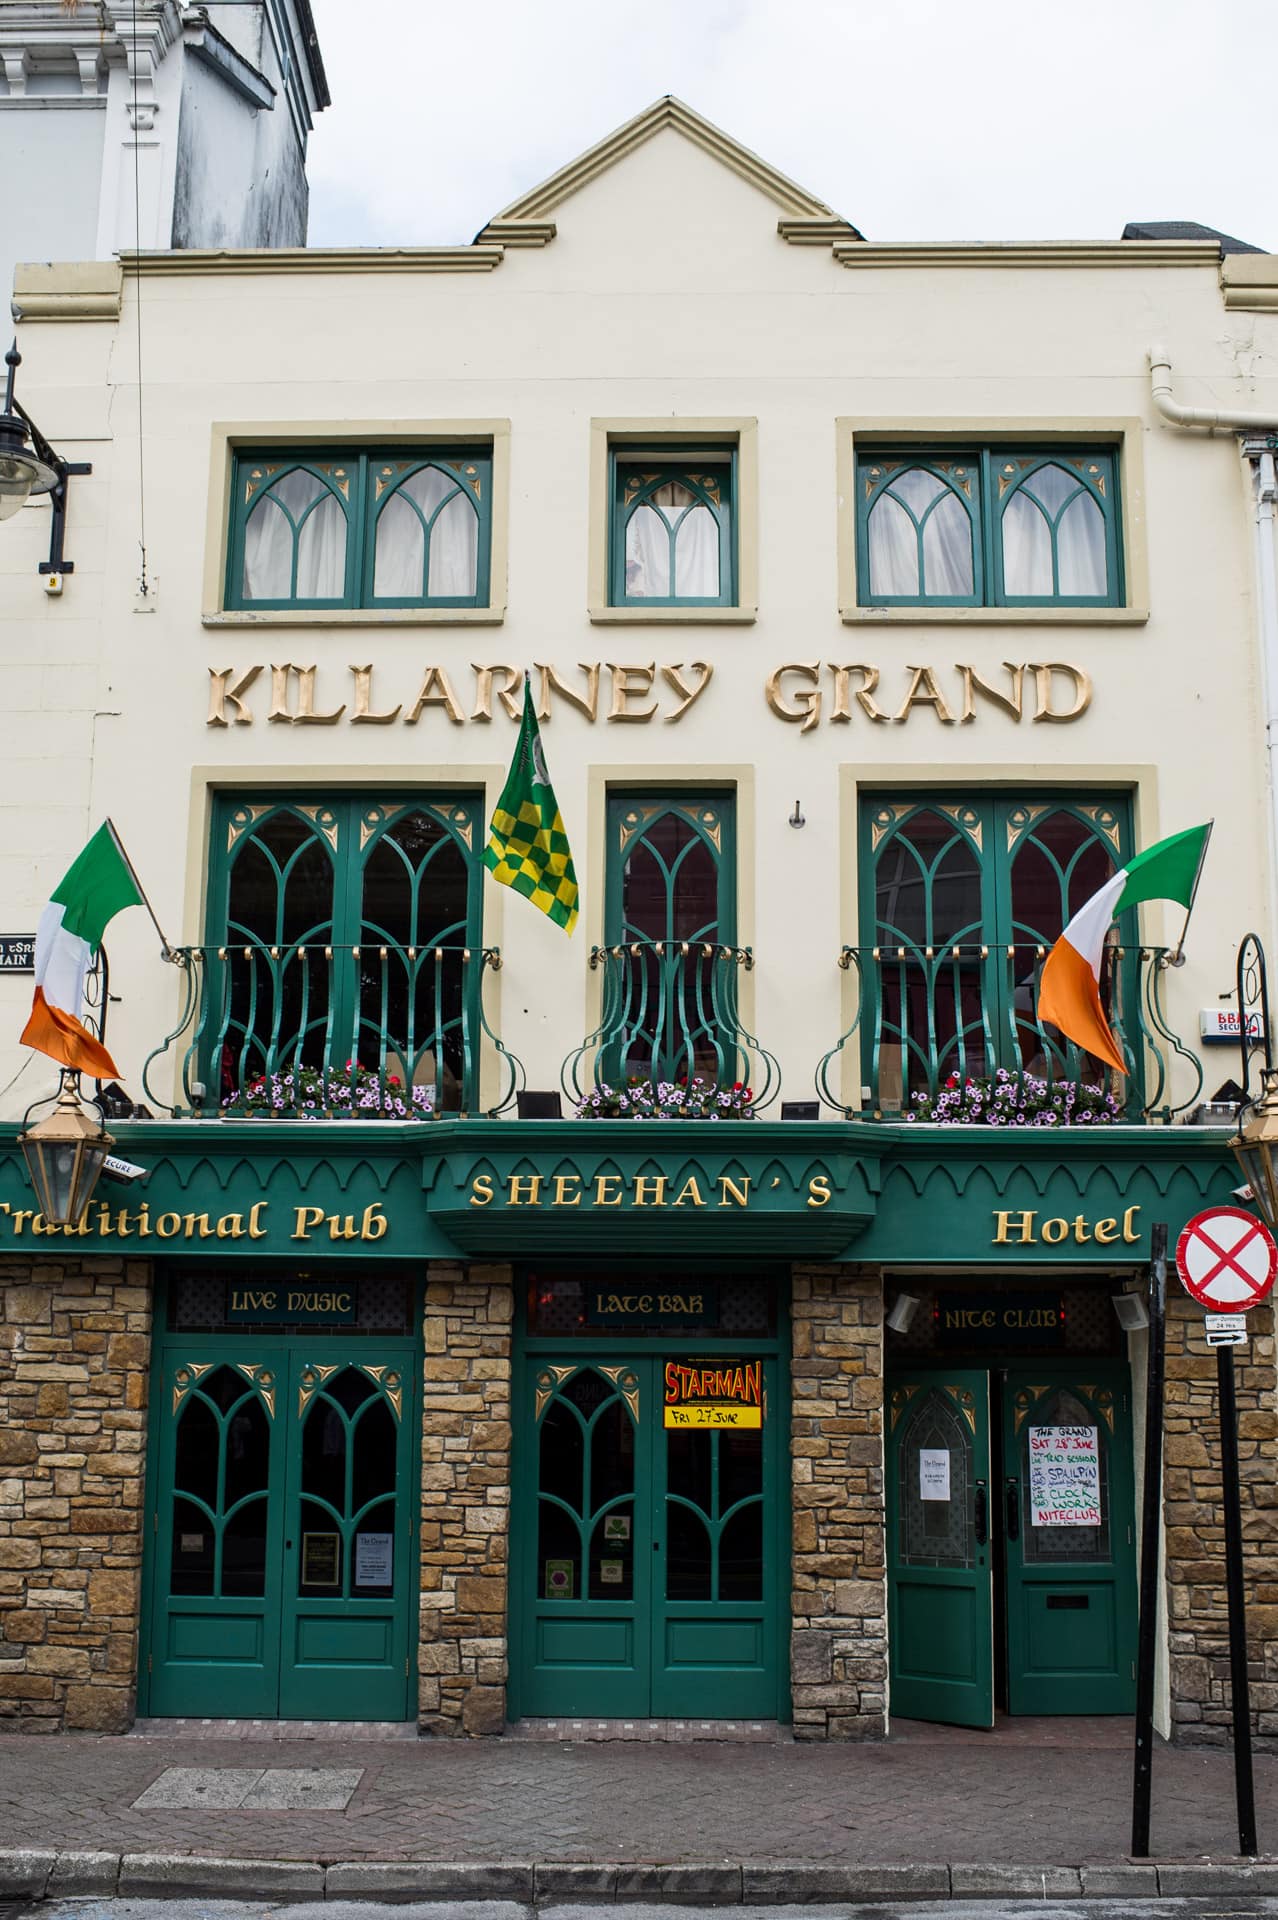 Killarney Grand pub